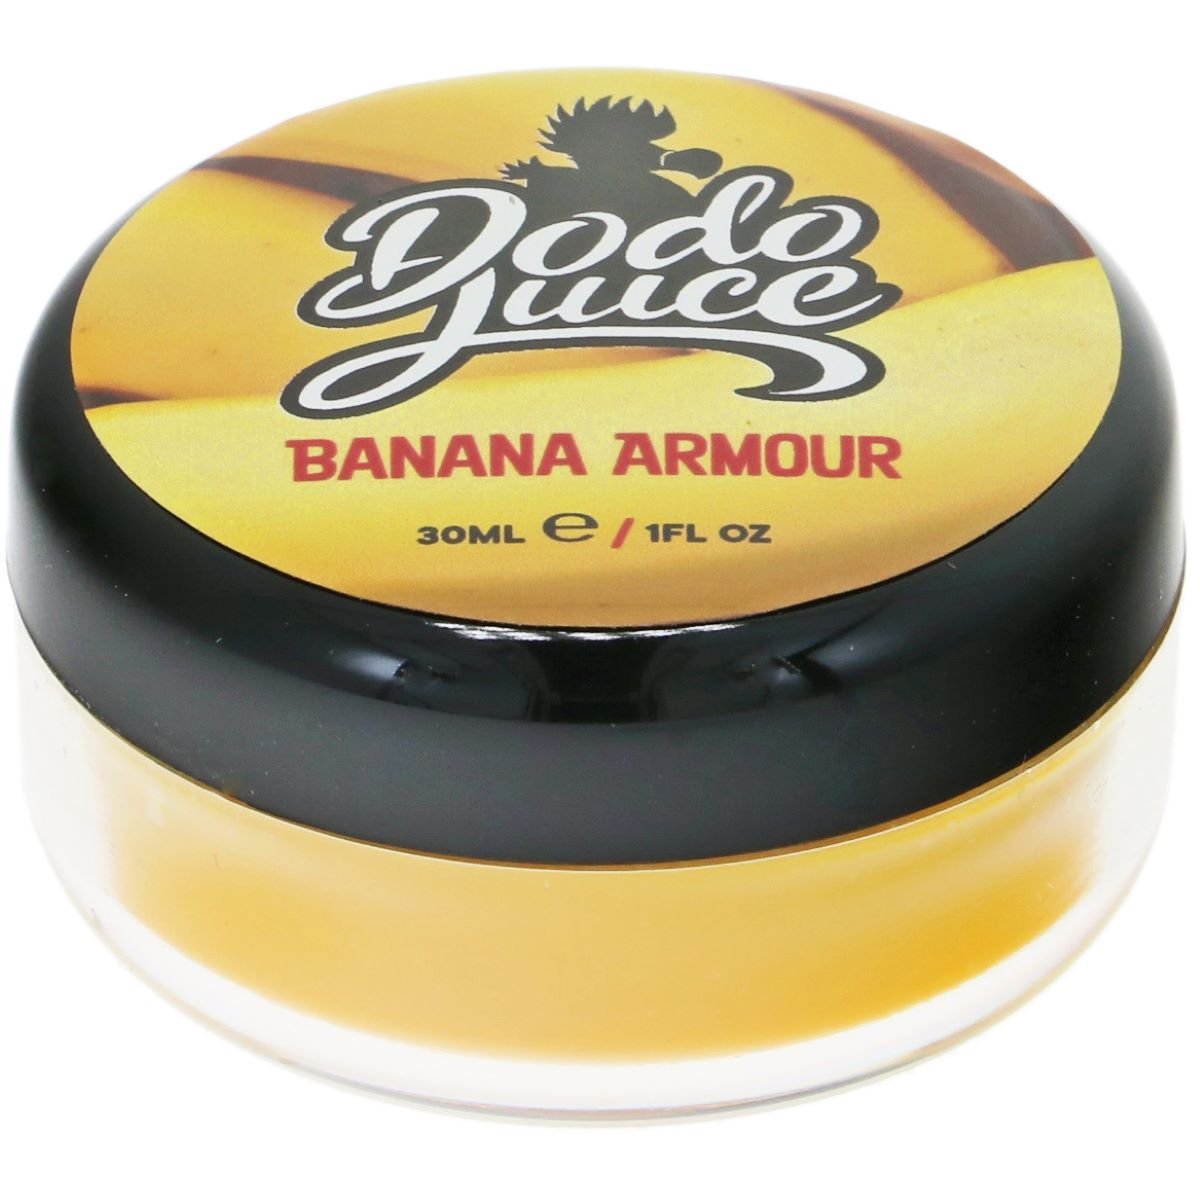 Banana Armour hard wax for warm coloured cars - 30ml